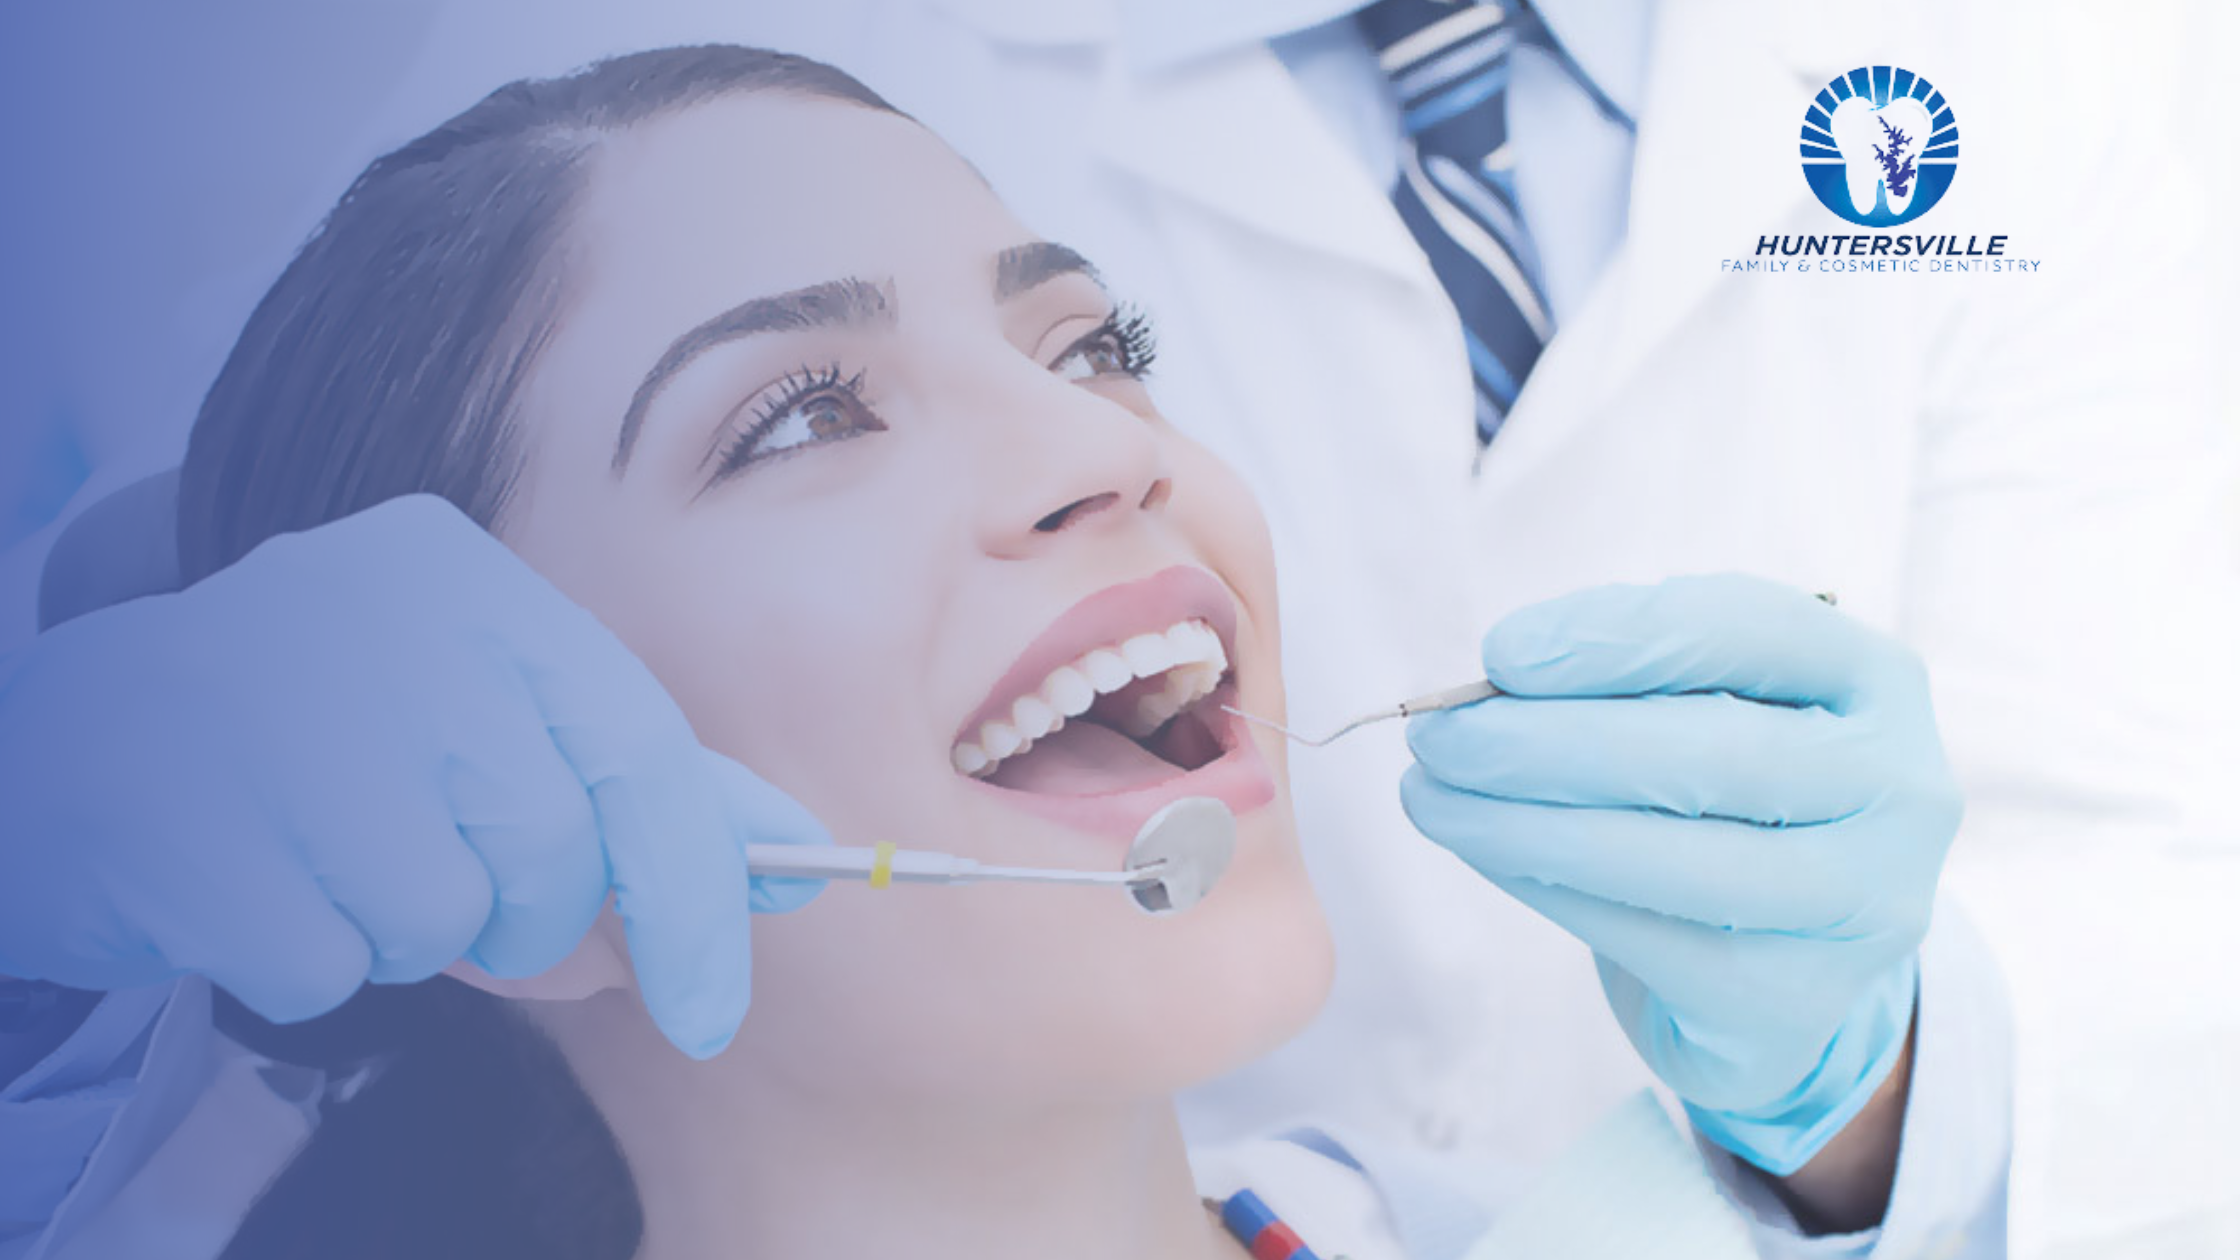 Huntersville Dentistry Practice Services